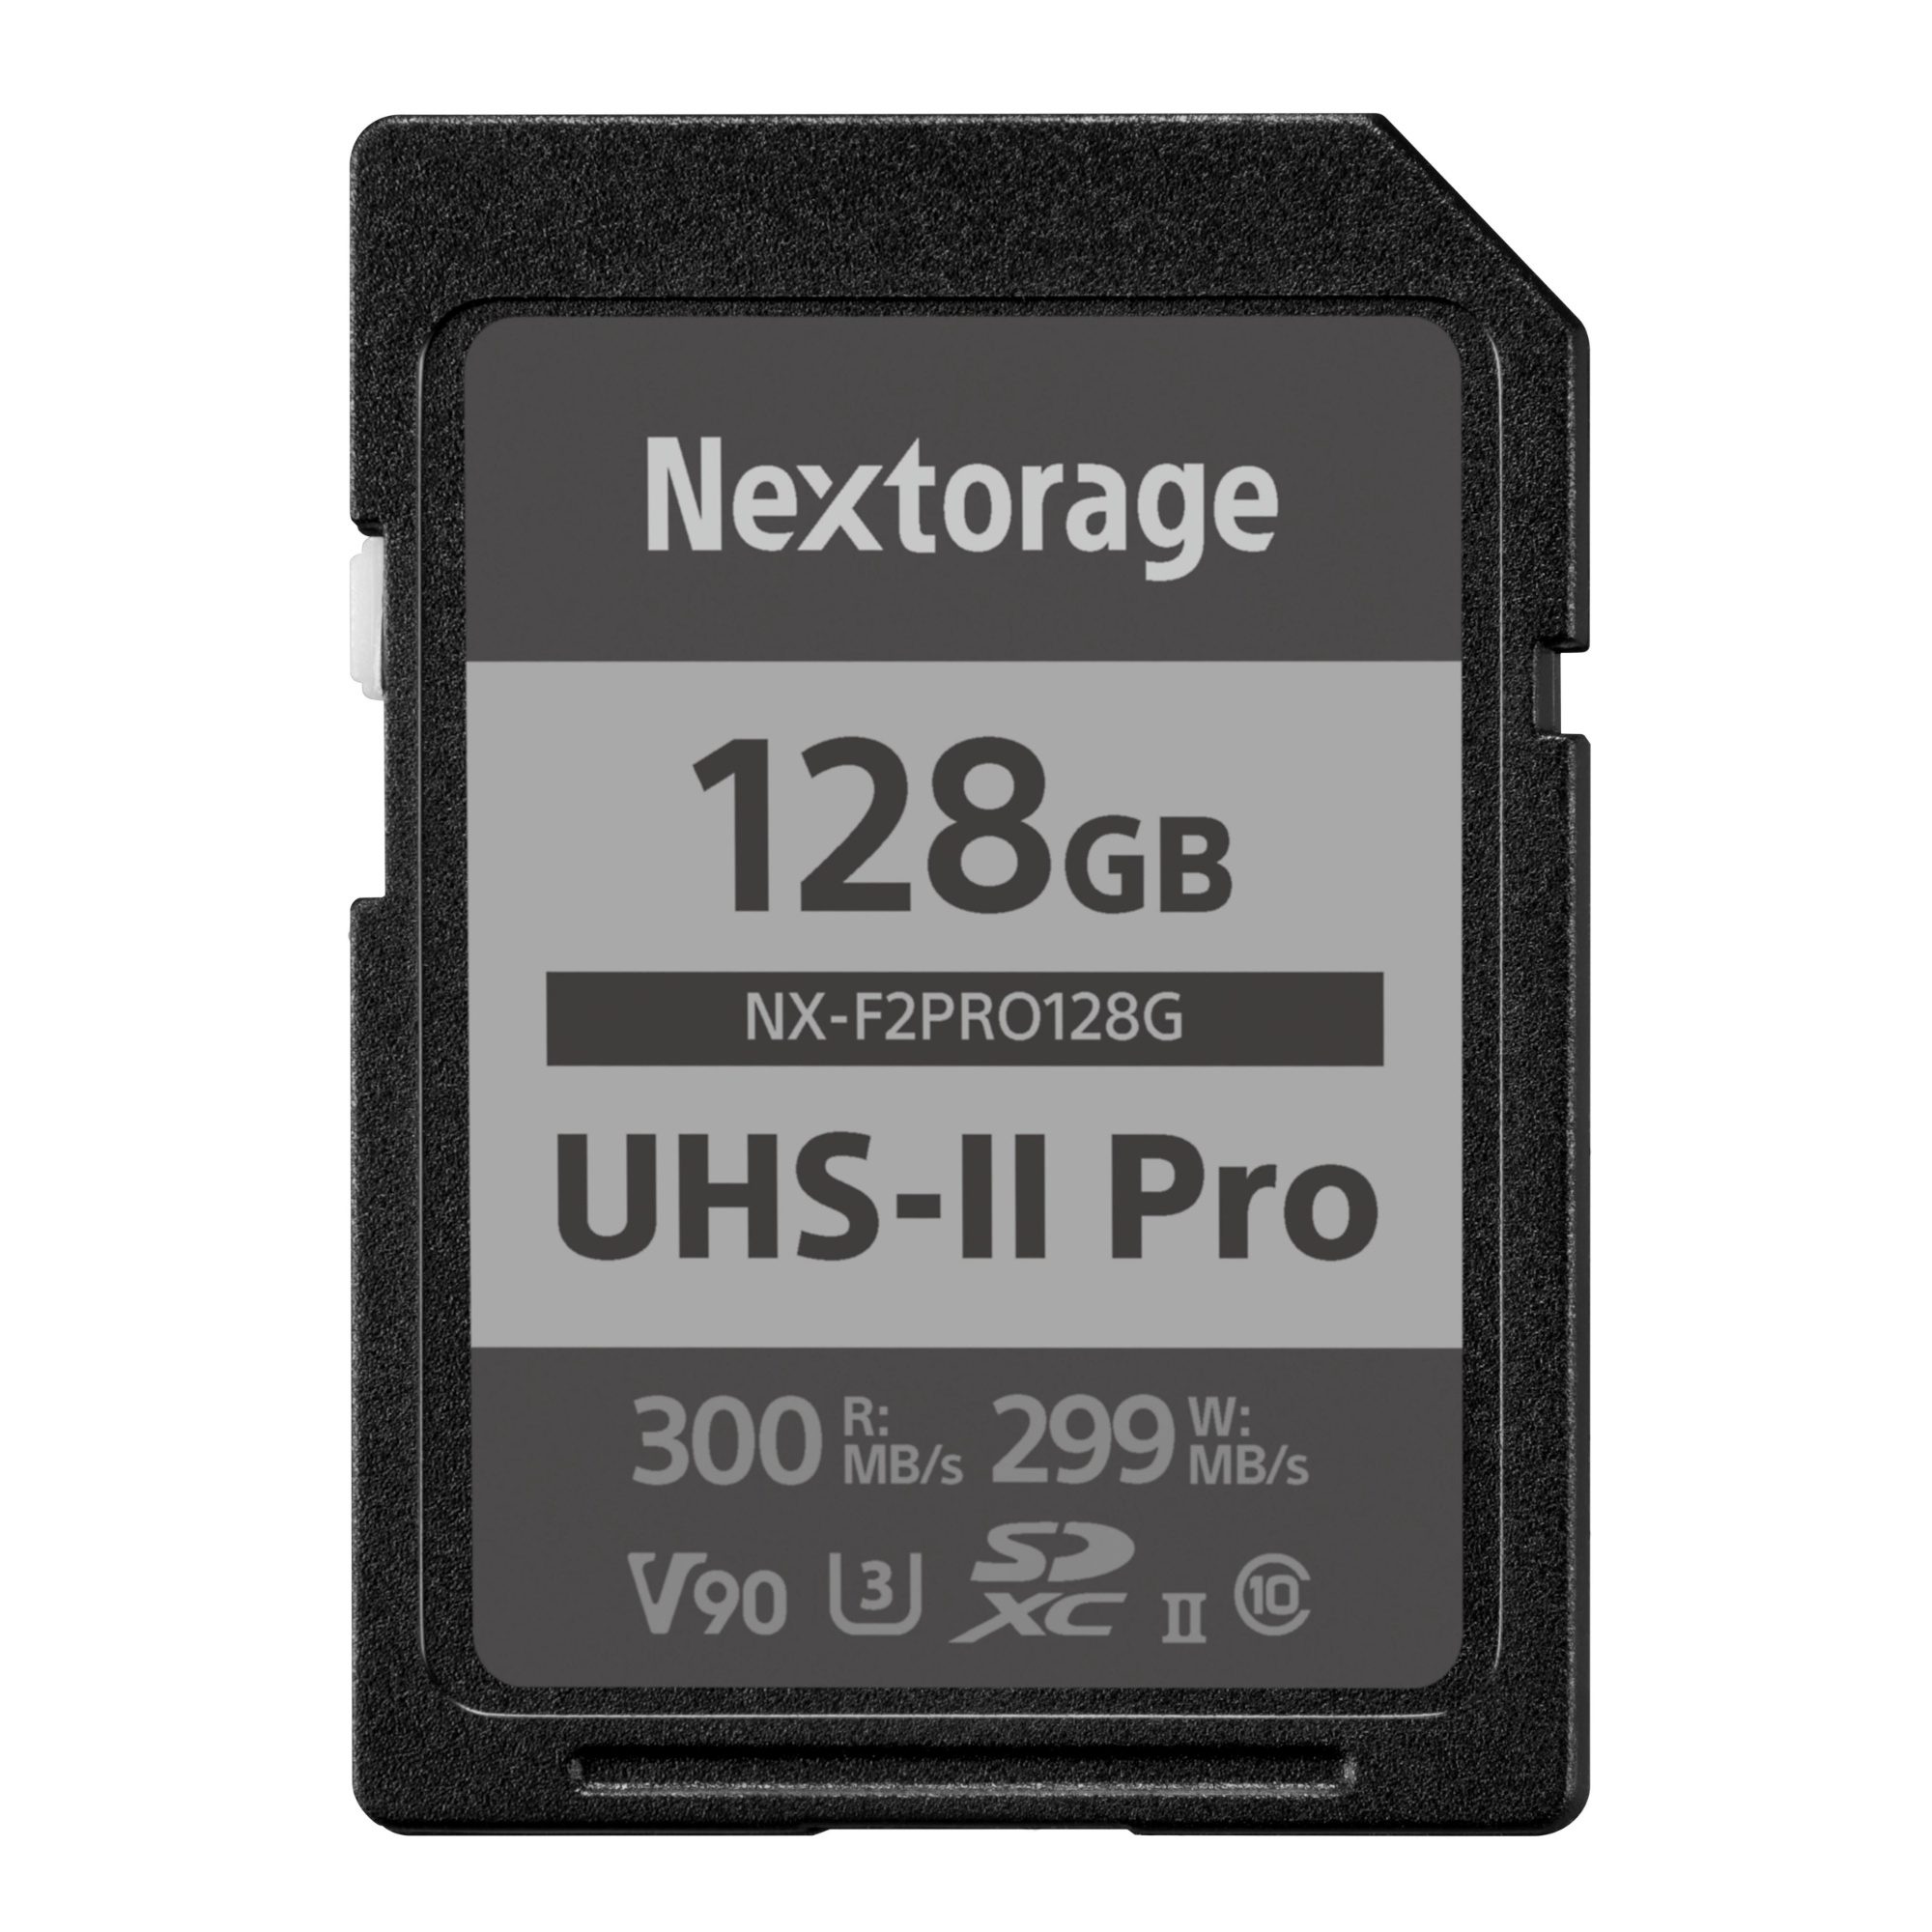 Nextorage V90 UHS-II SD card Pro series 128GB